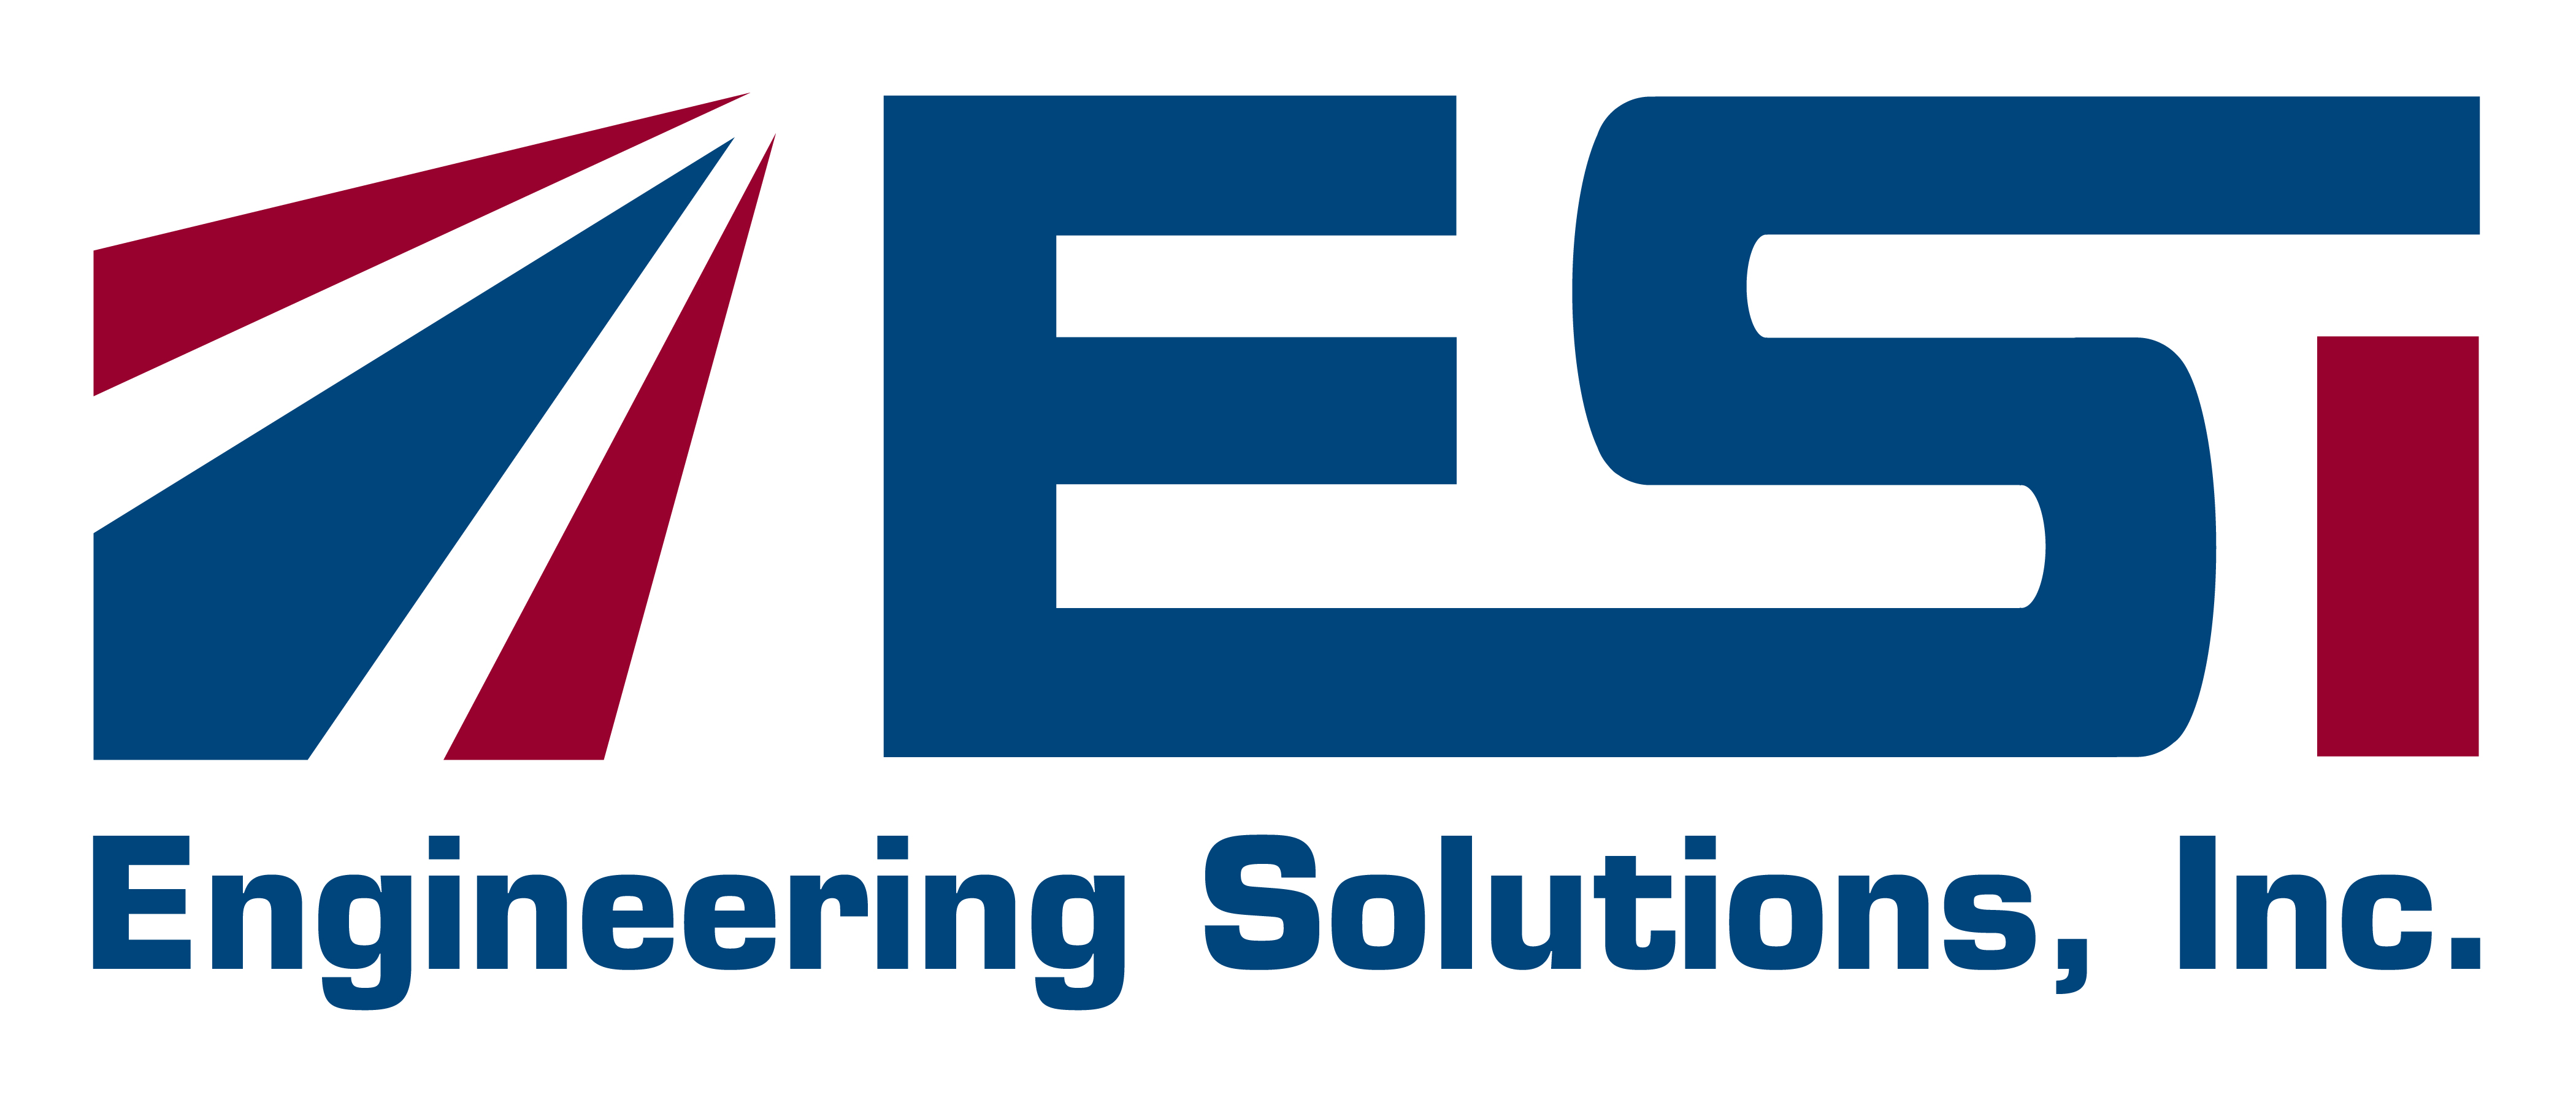 Engineering Solutions, Inc. (ESi) logo